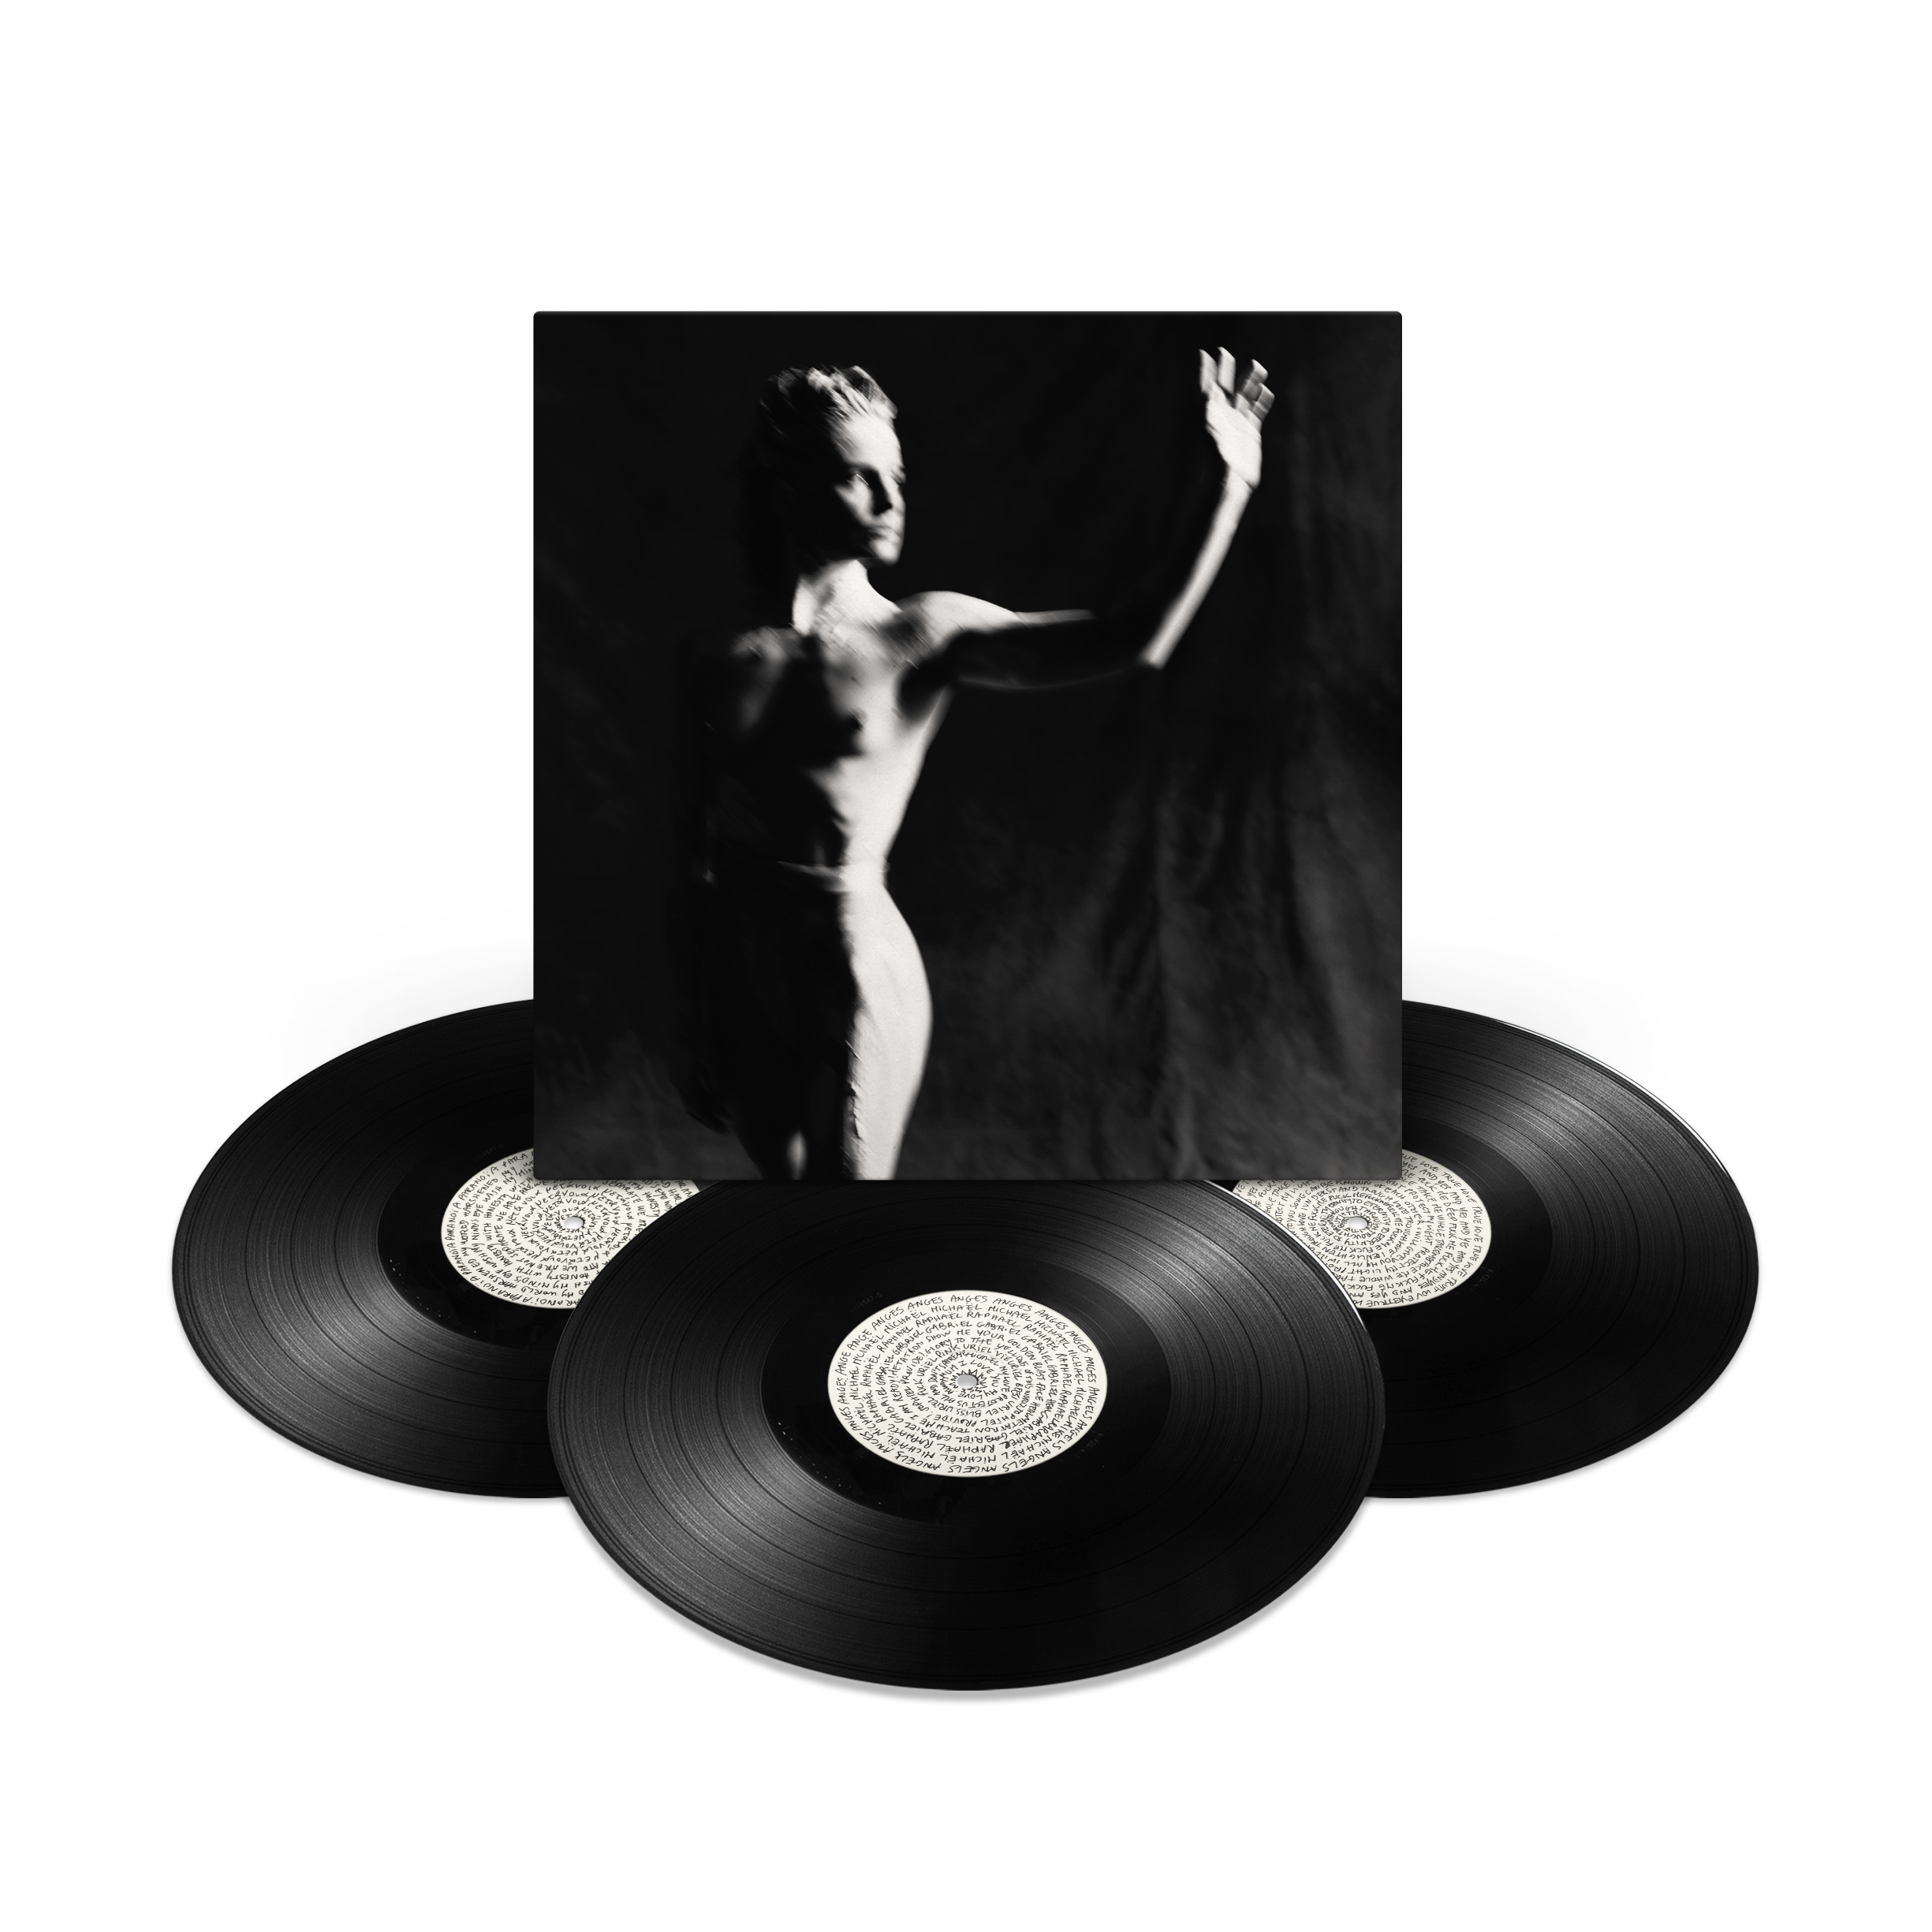 Christine and the Queens - PARANOÏA, ANGELS, TRUE LOVE: 180gm Vinyl 3LP